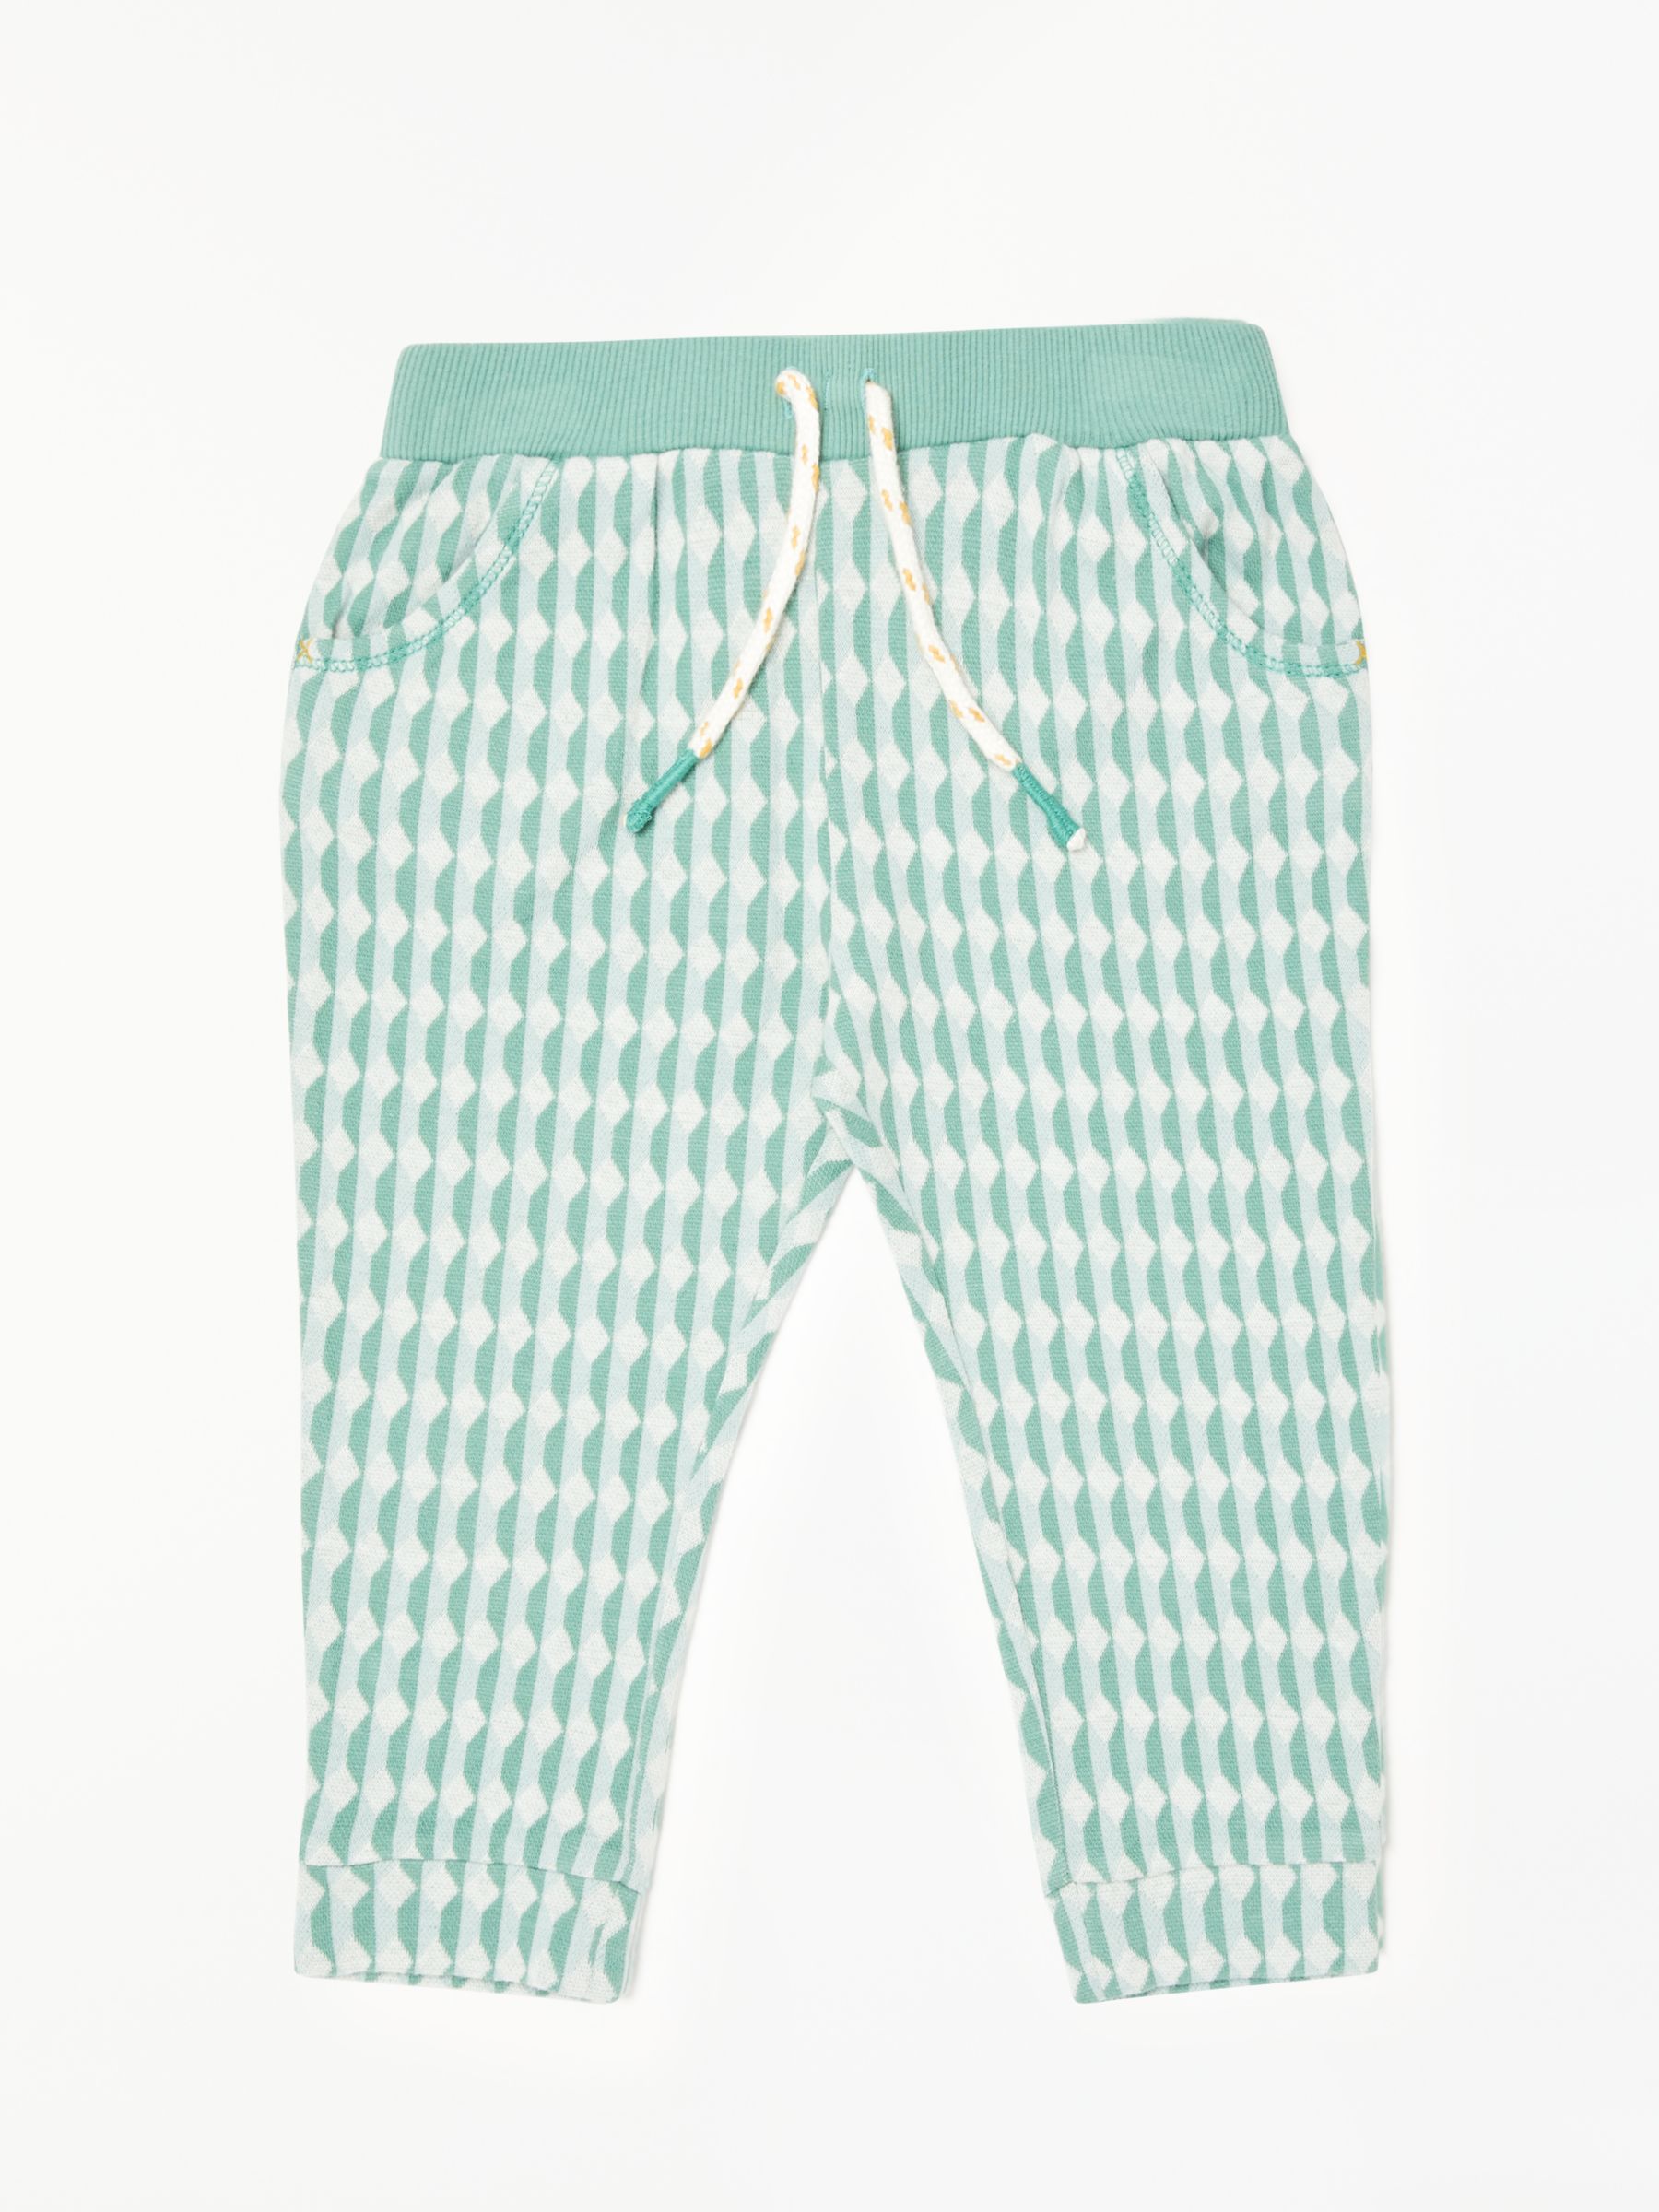 John Lewis & Partners Baby Organic Cotton Jacquard Trousers, Green, 18-24 months